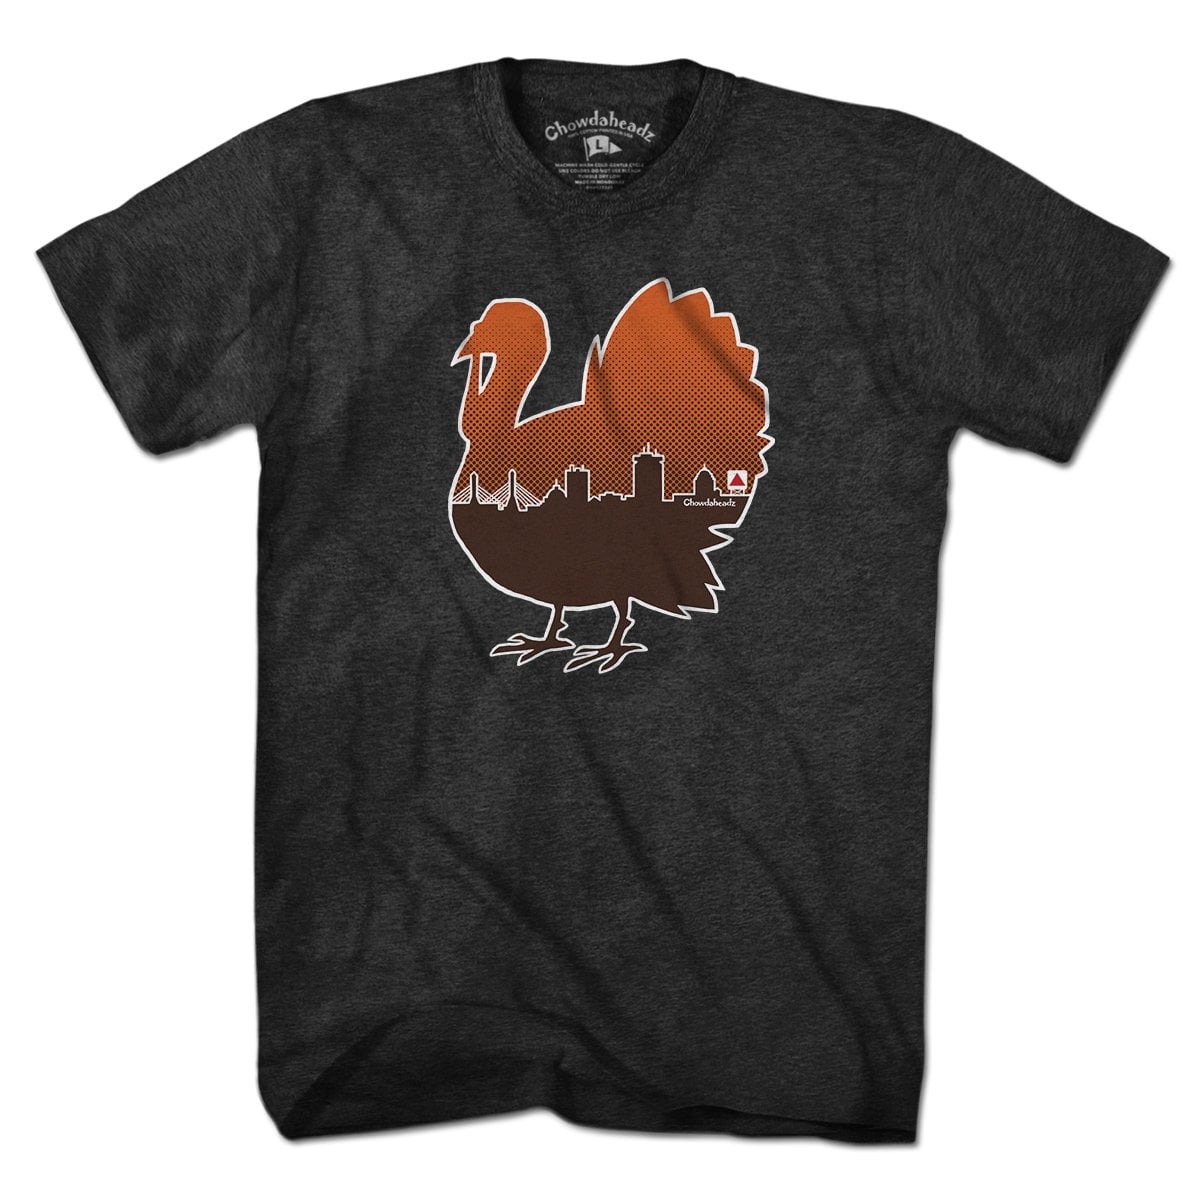 Boston Thanksgiving Turkey Skyline T-Shirt - Chowdaheadz